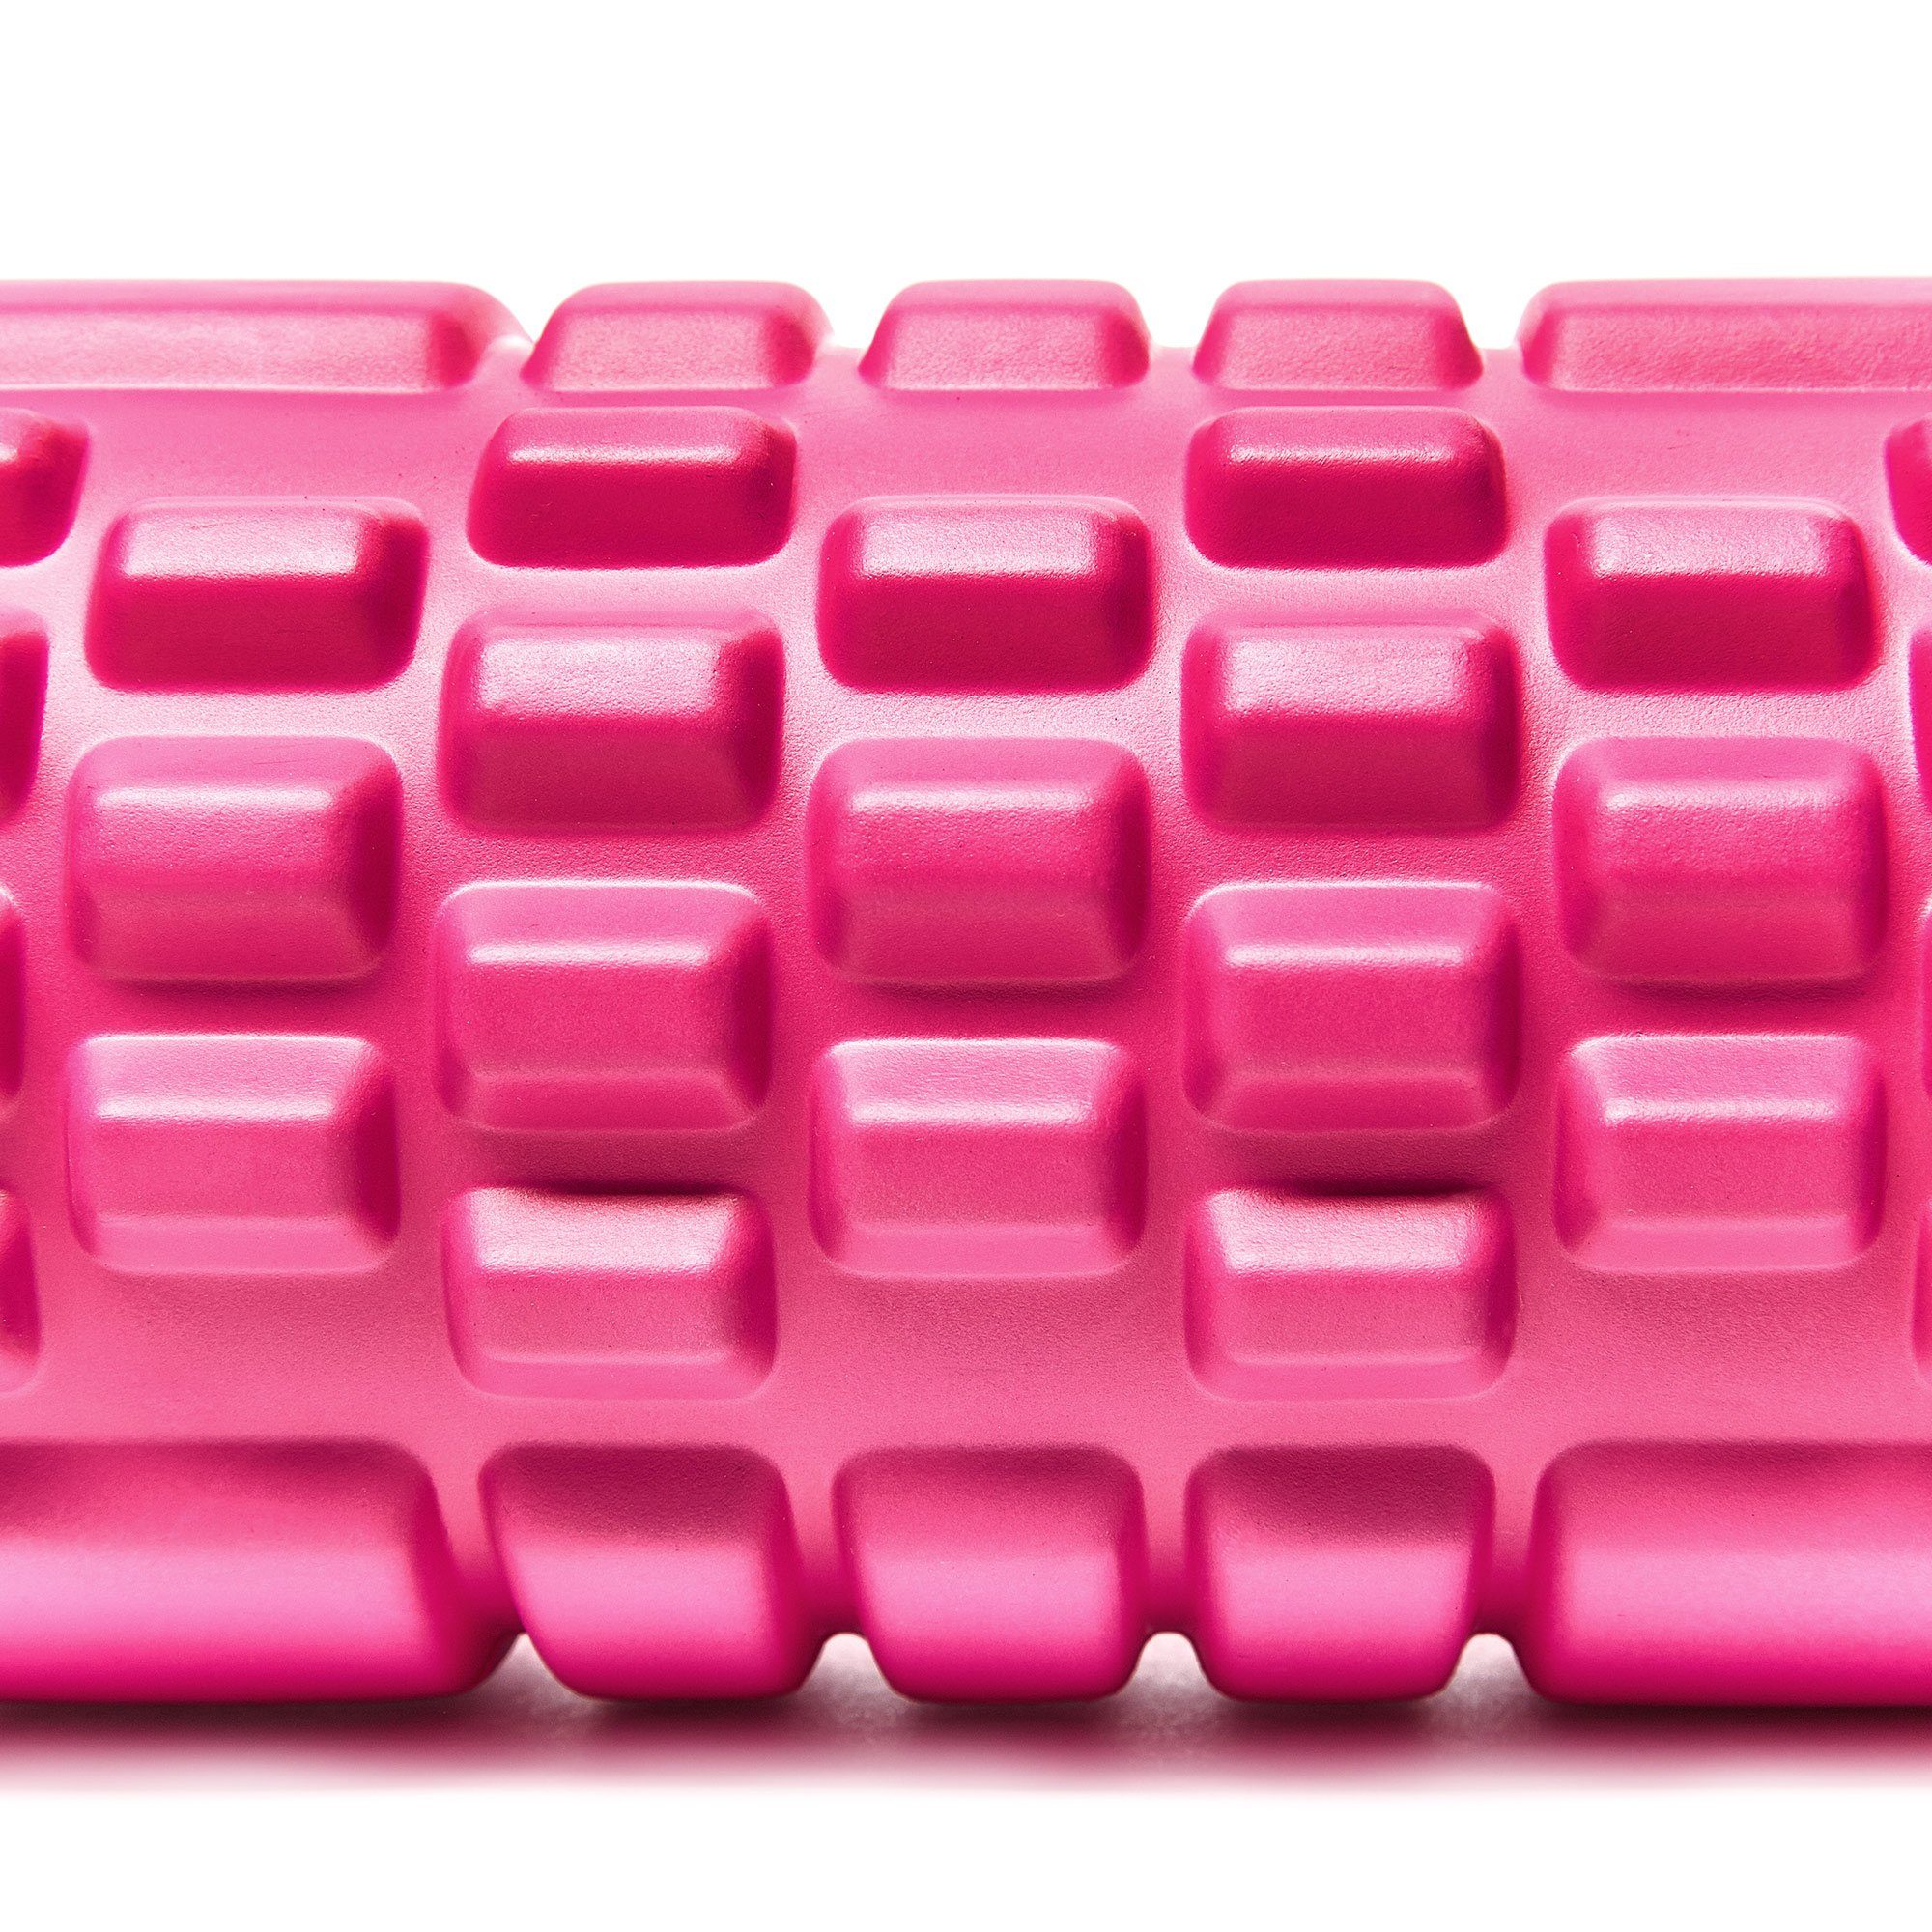 #DoYourFitness Massagerolle Fitnessrolle 34x14cm pink Trainingsplan, Anasuya inkl. Faszienrolle